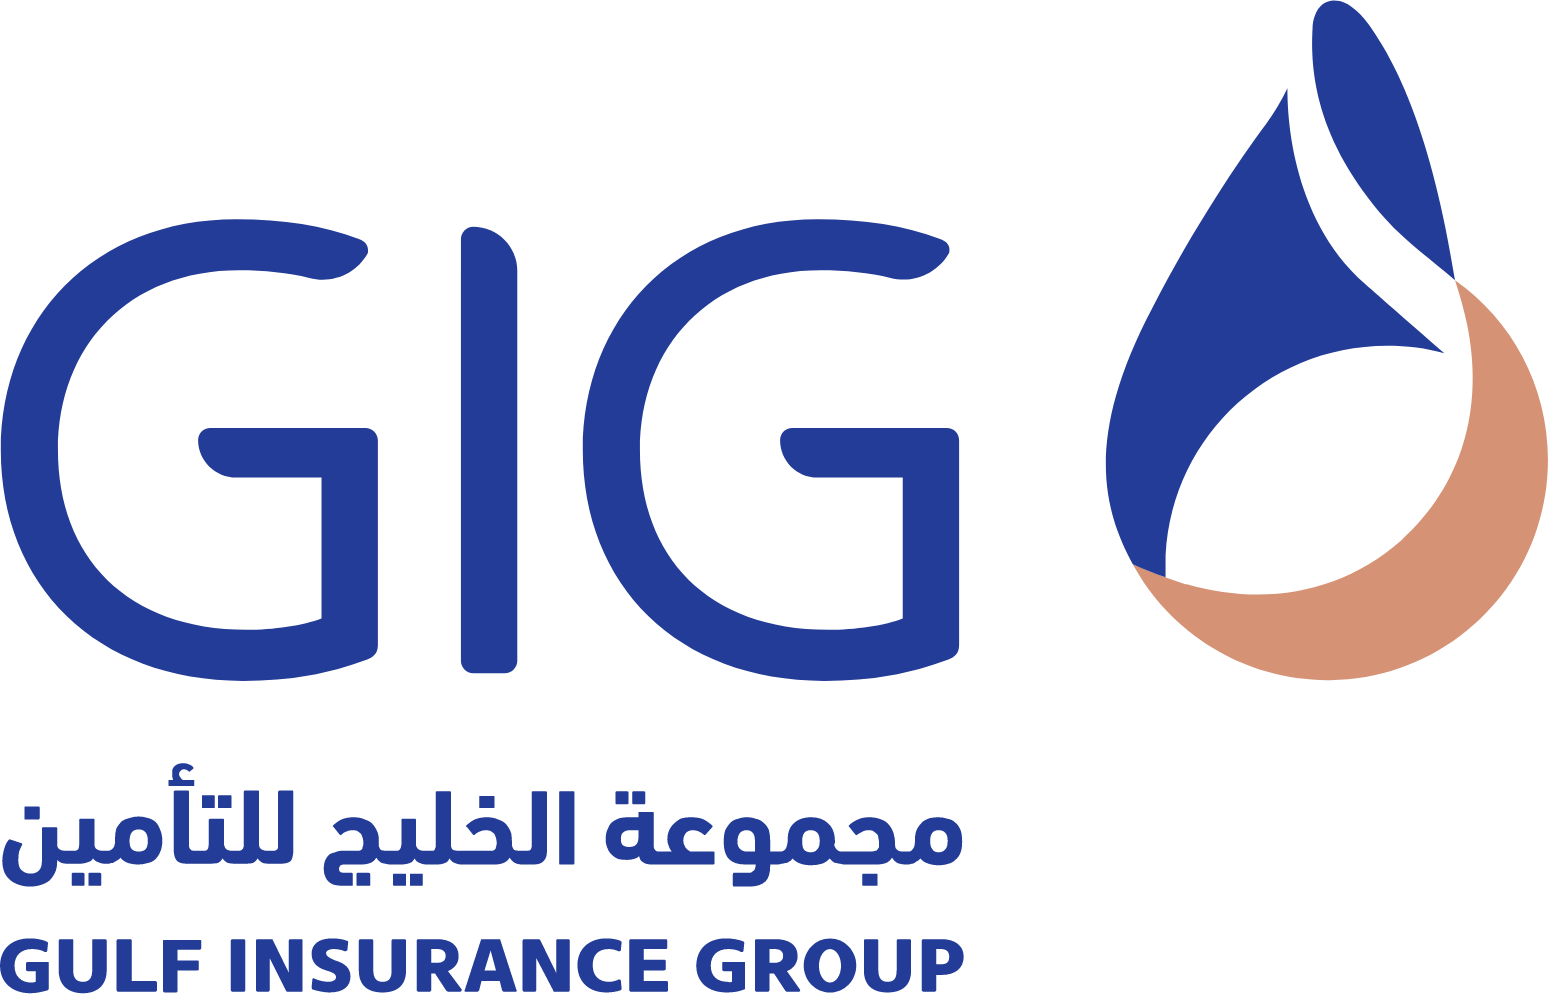 Gulf Insurance Group logo large (transparent PNG)